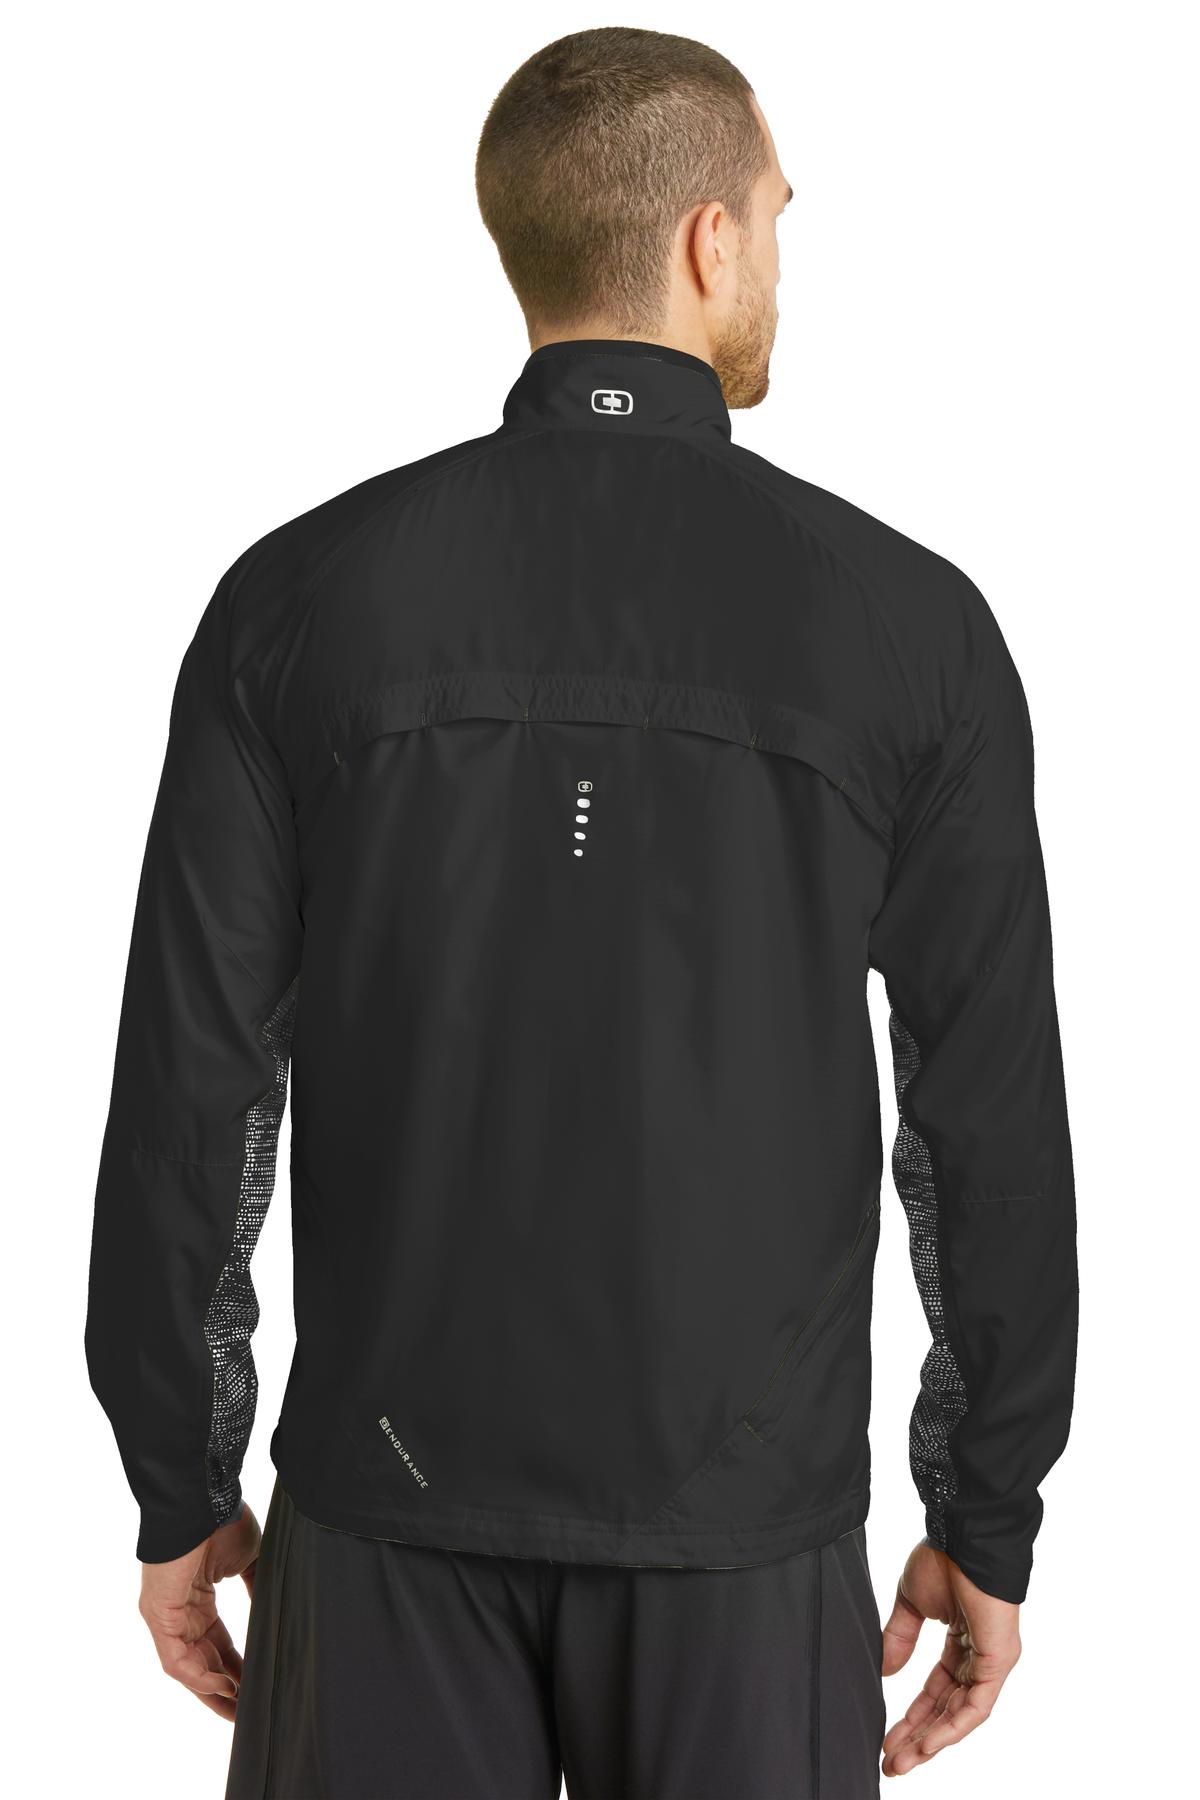 OGIO ® ENDURANCE Trainer Jacket. OE710 - Custom Shirt Shop